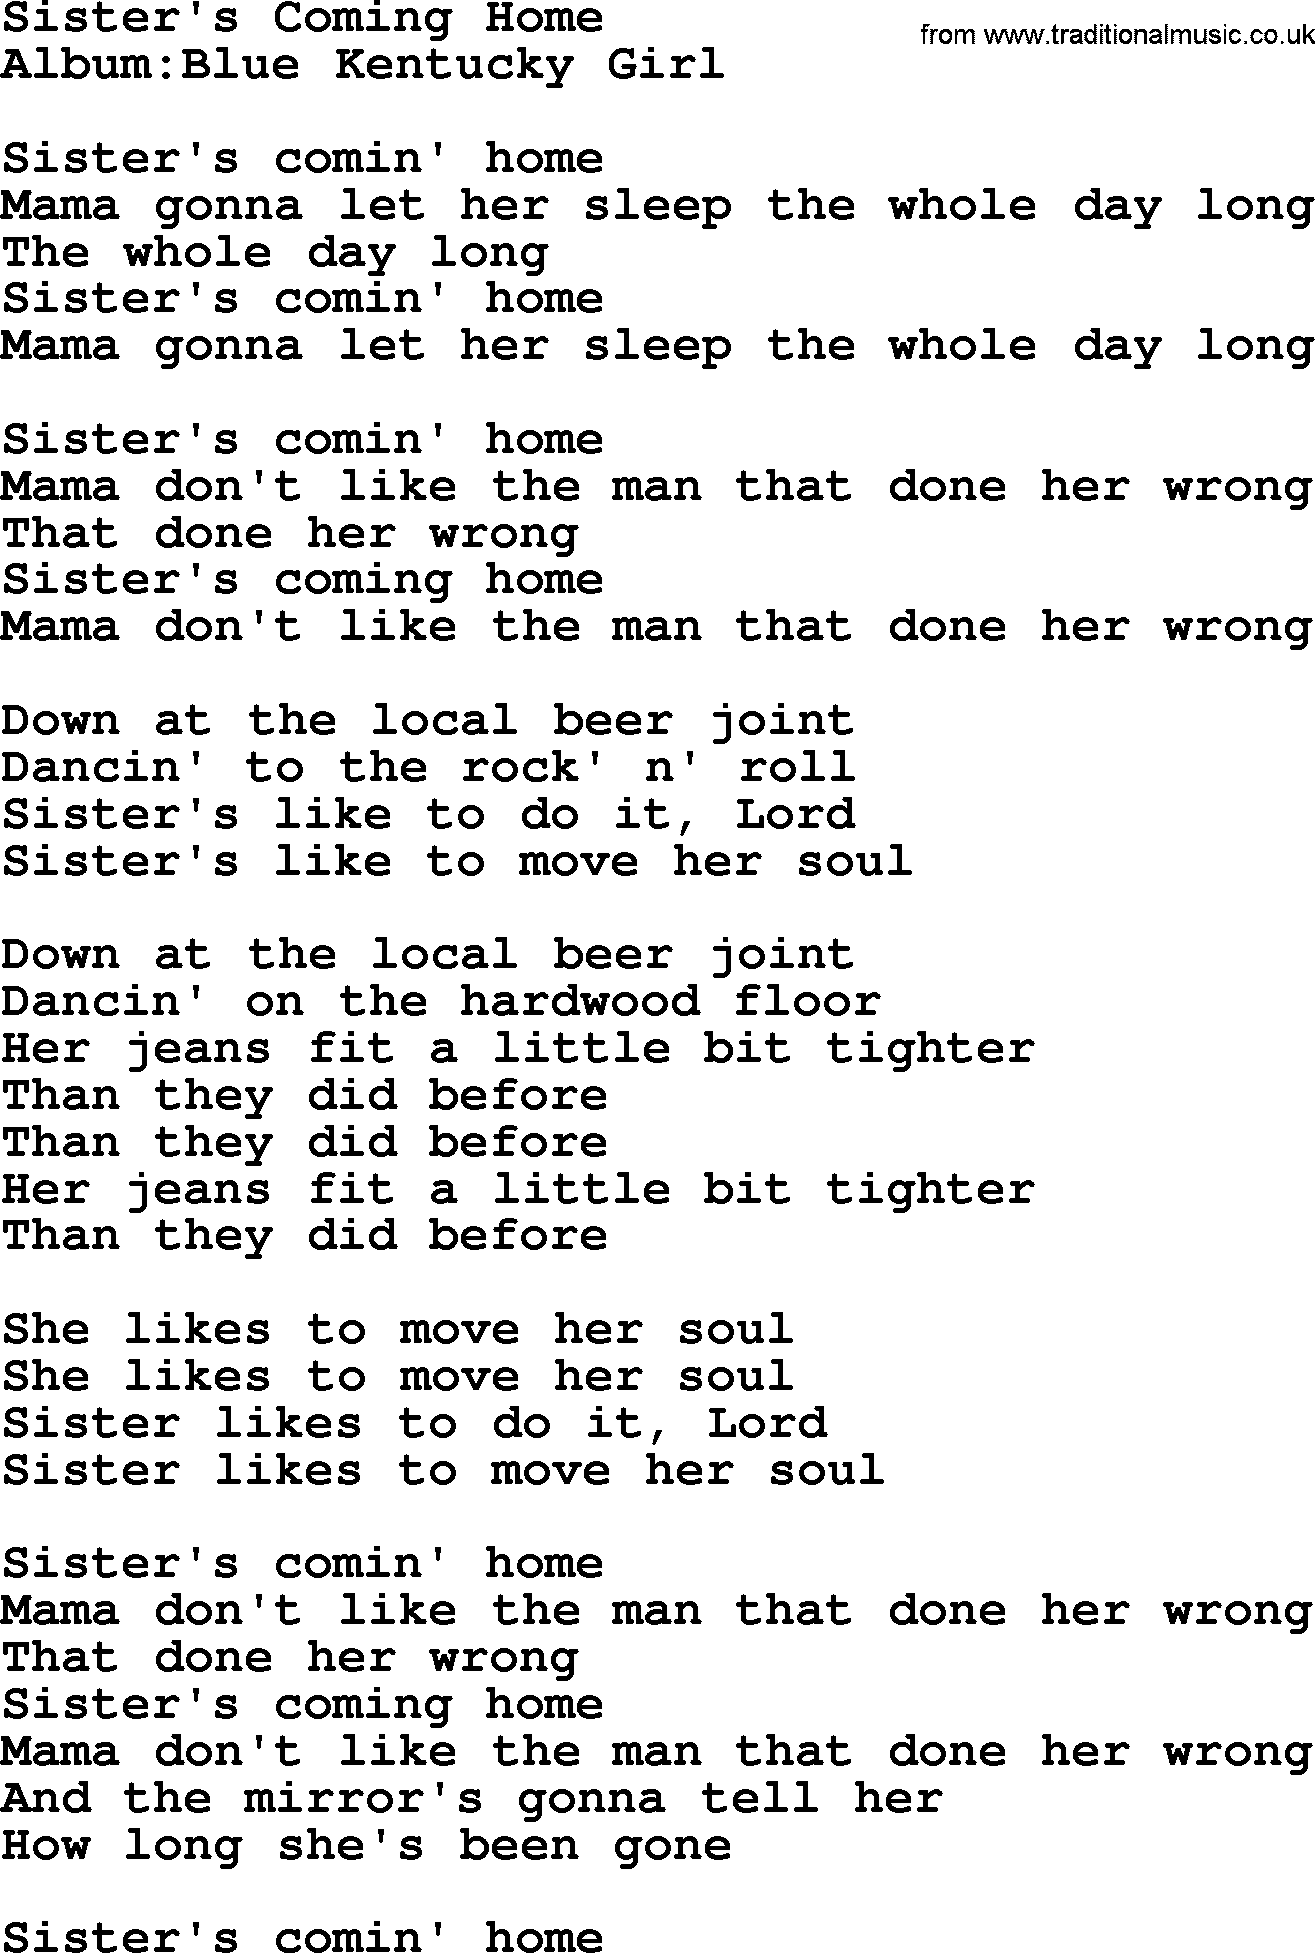 Emmylou Harris song: Sister's Coming Home lyrics